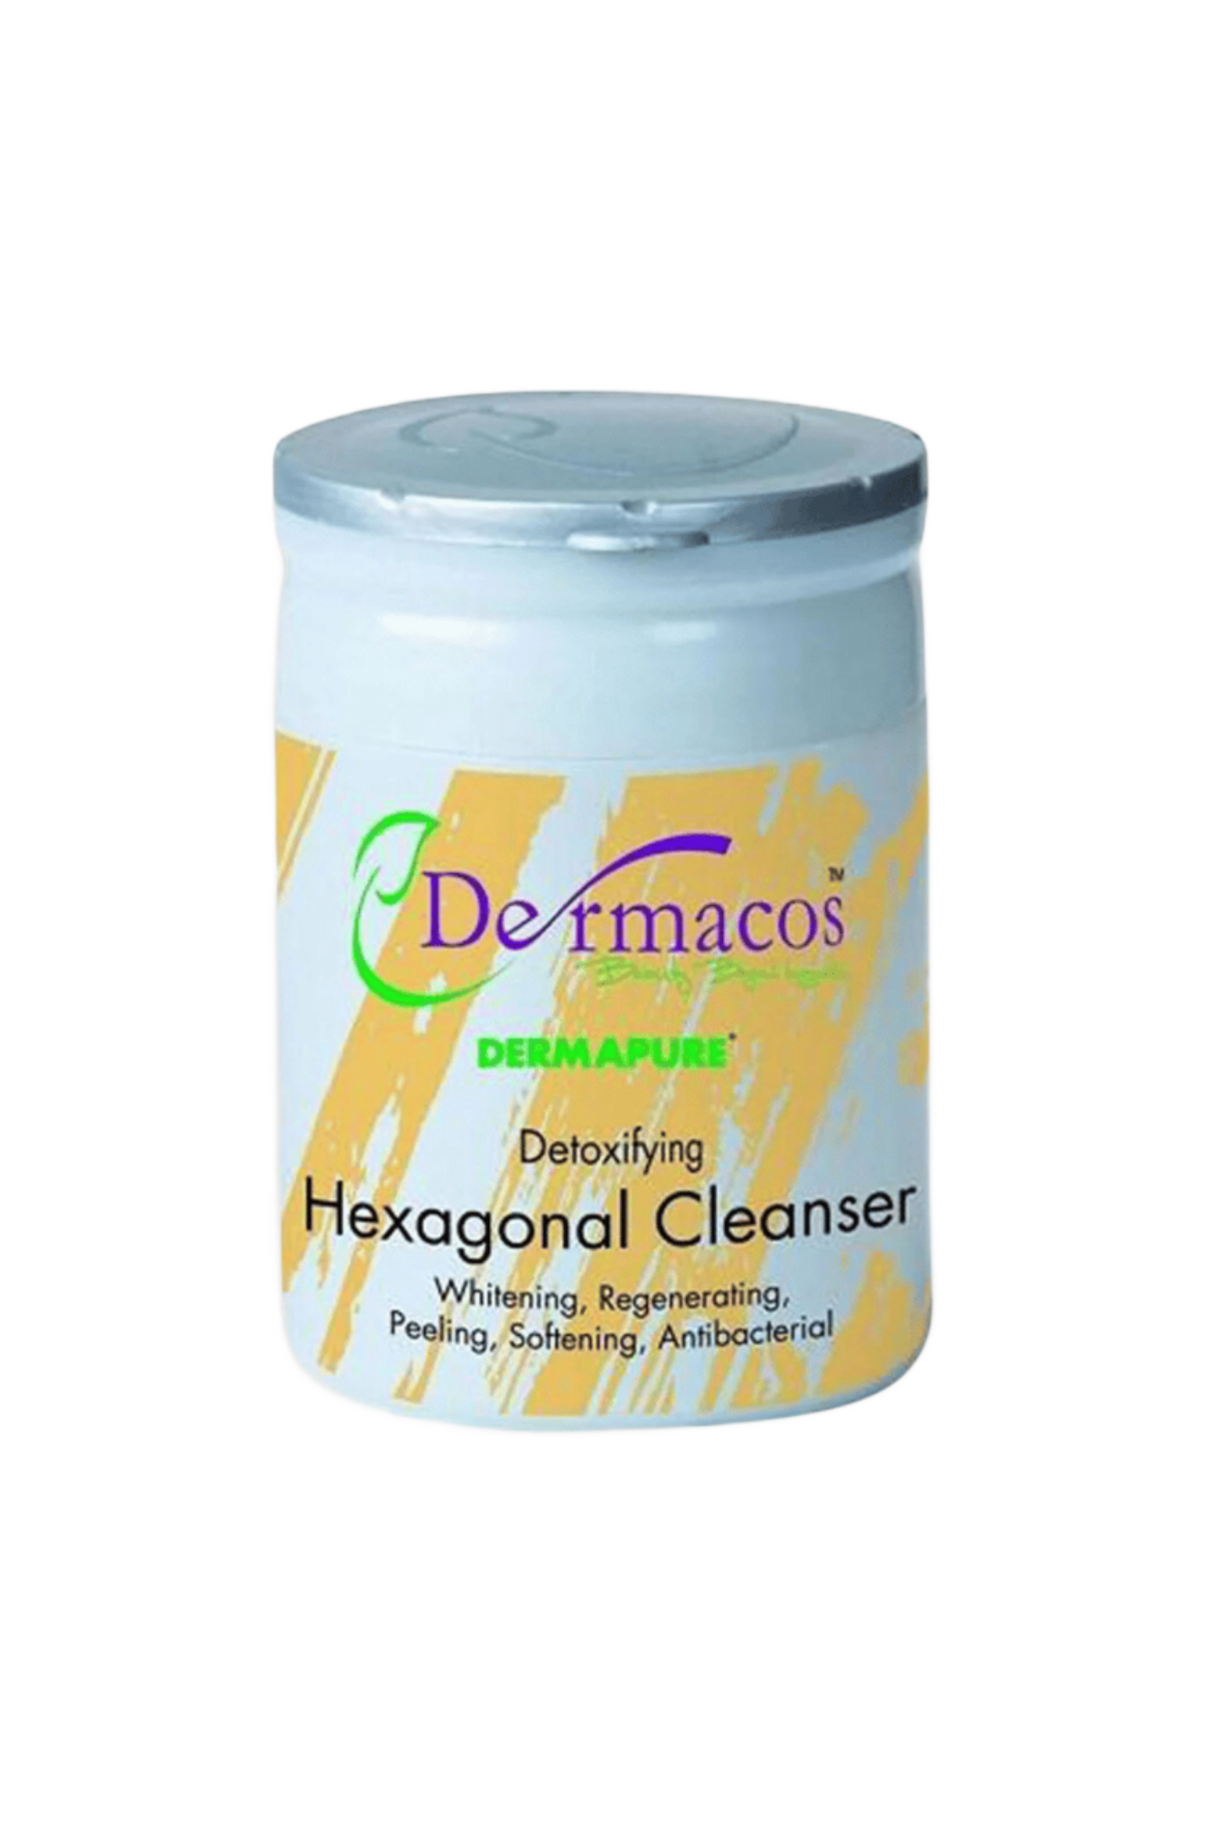 dermacos hexagonal cleanser 200g